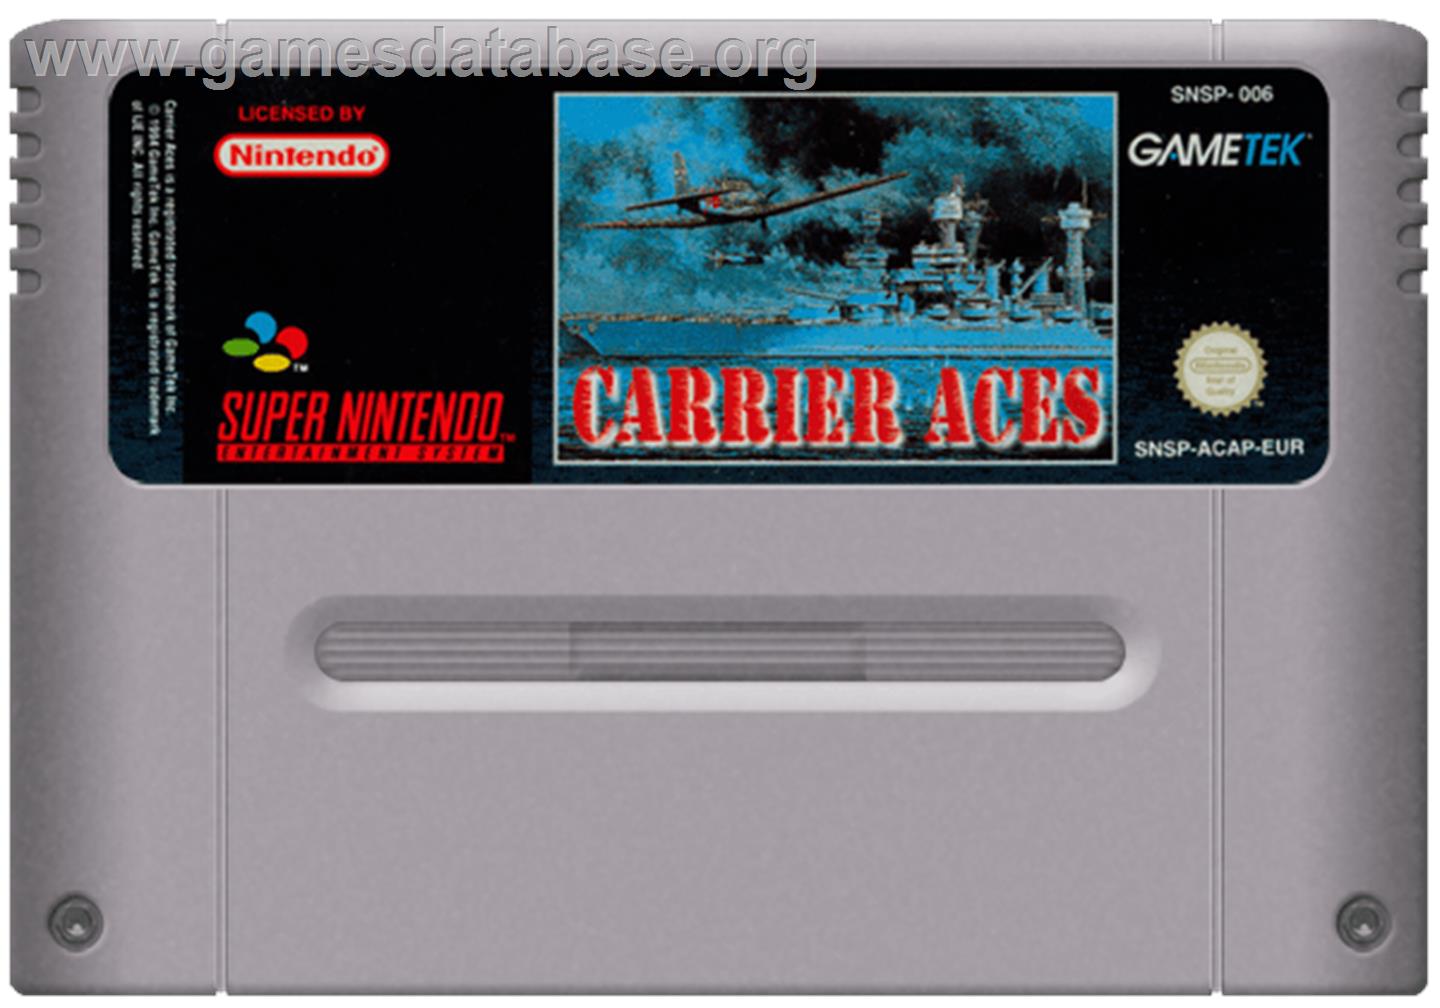 Carrier Aces - Nintendo SNES - Artwork - Cartridge